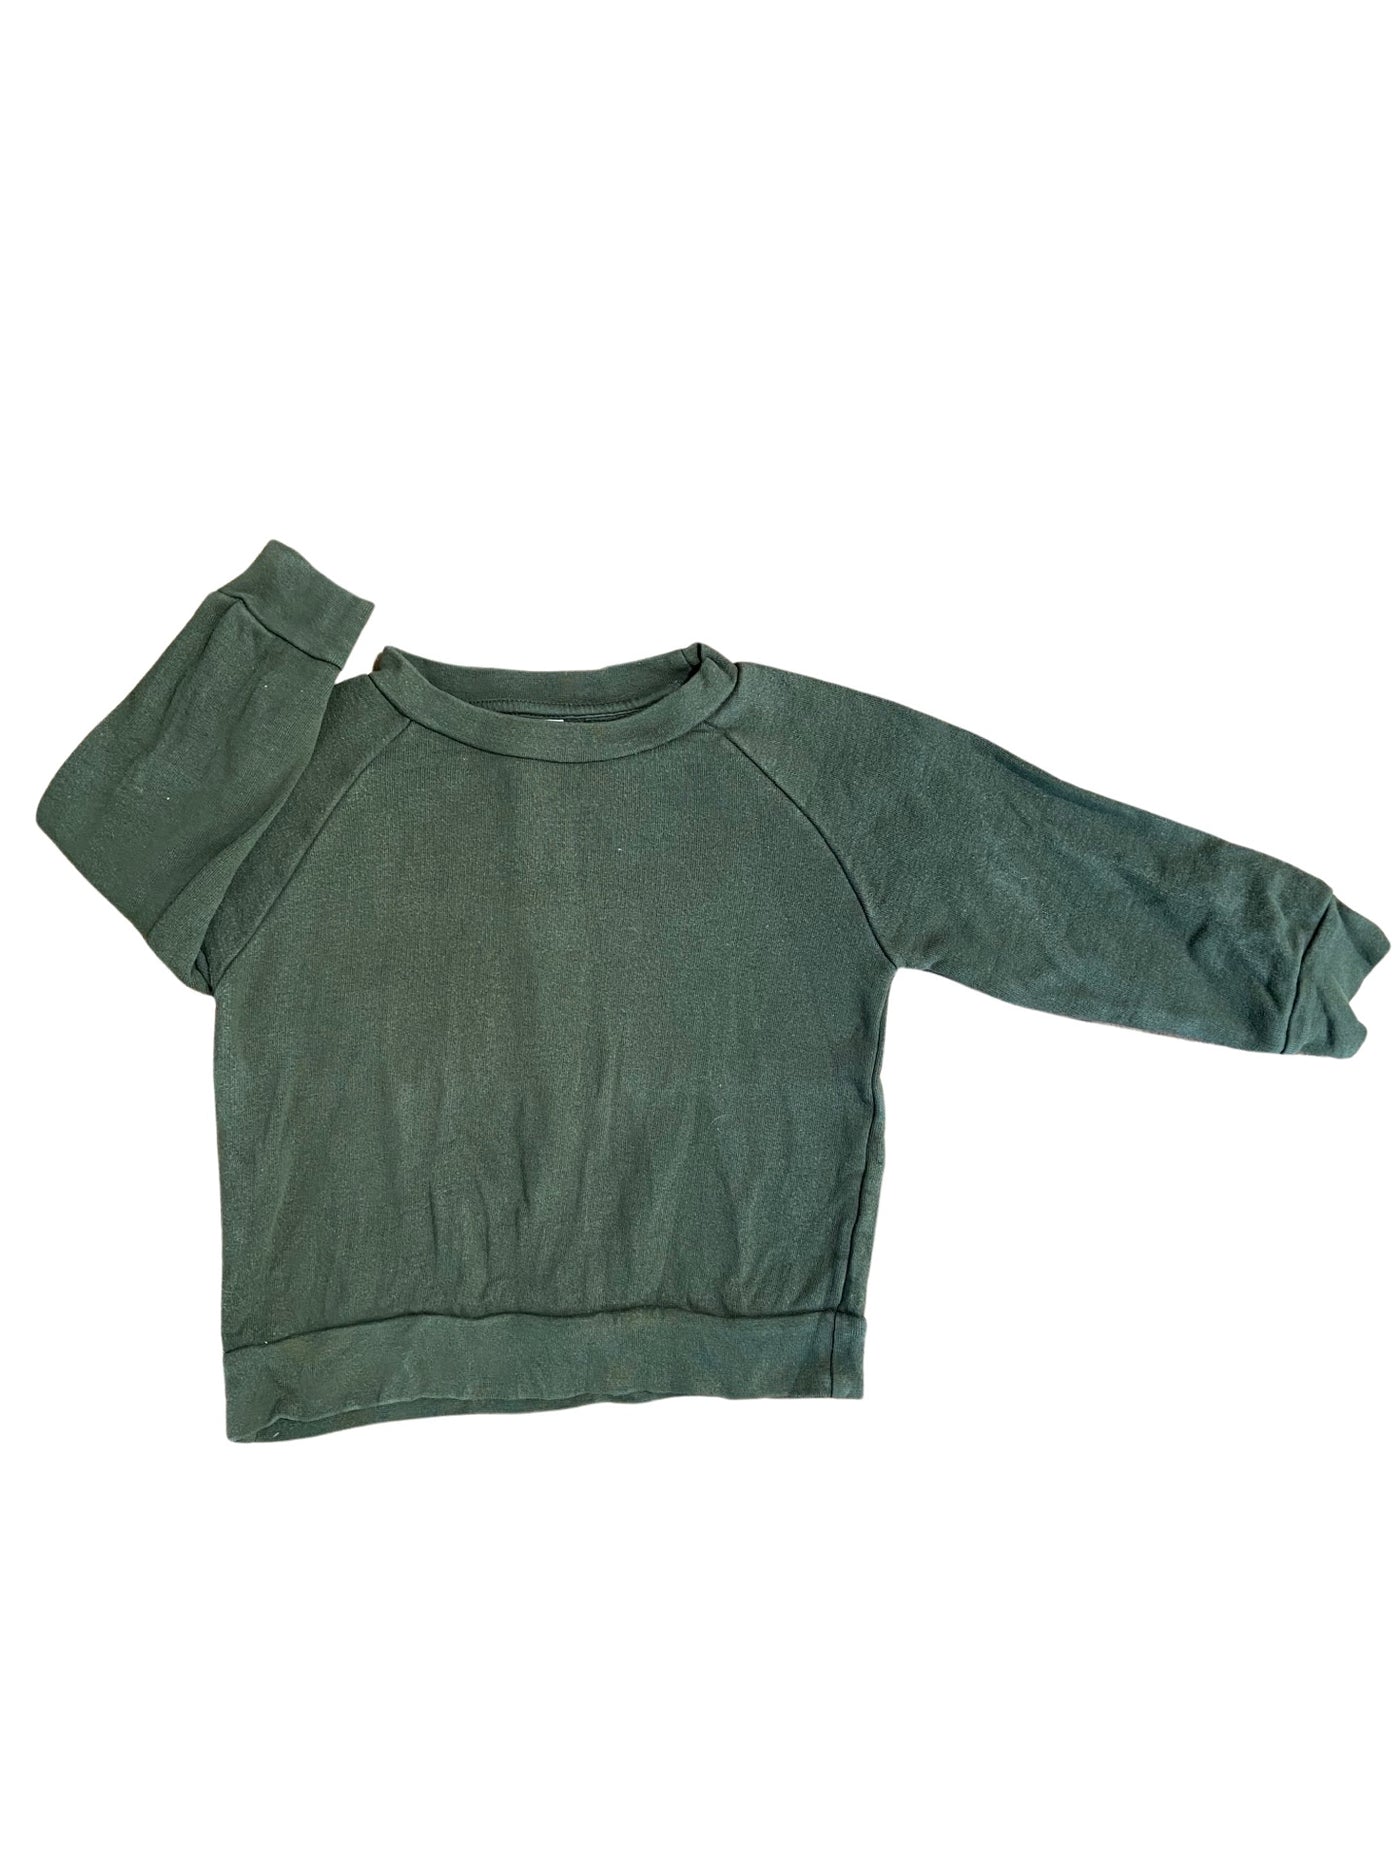 Vintage Green Raglan Sweater - Size 2T